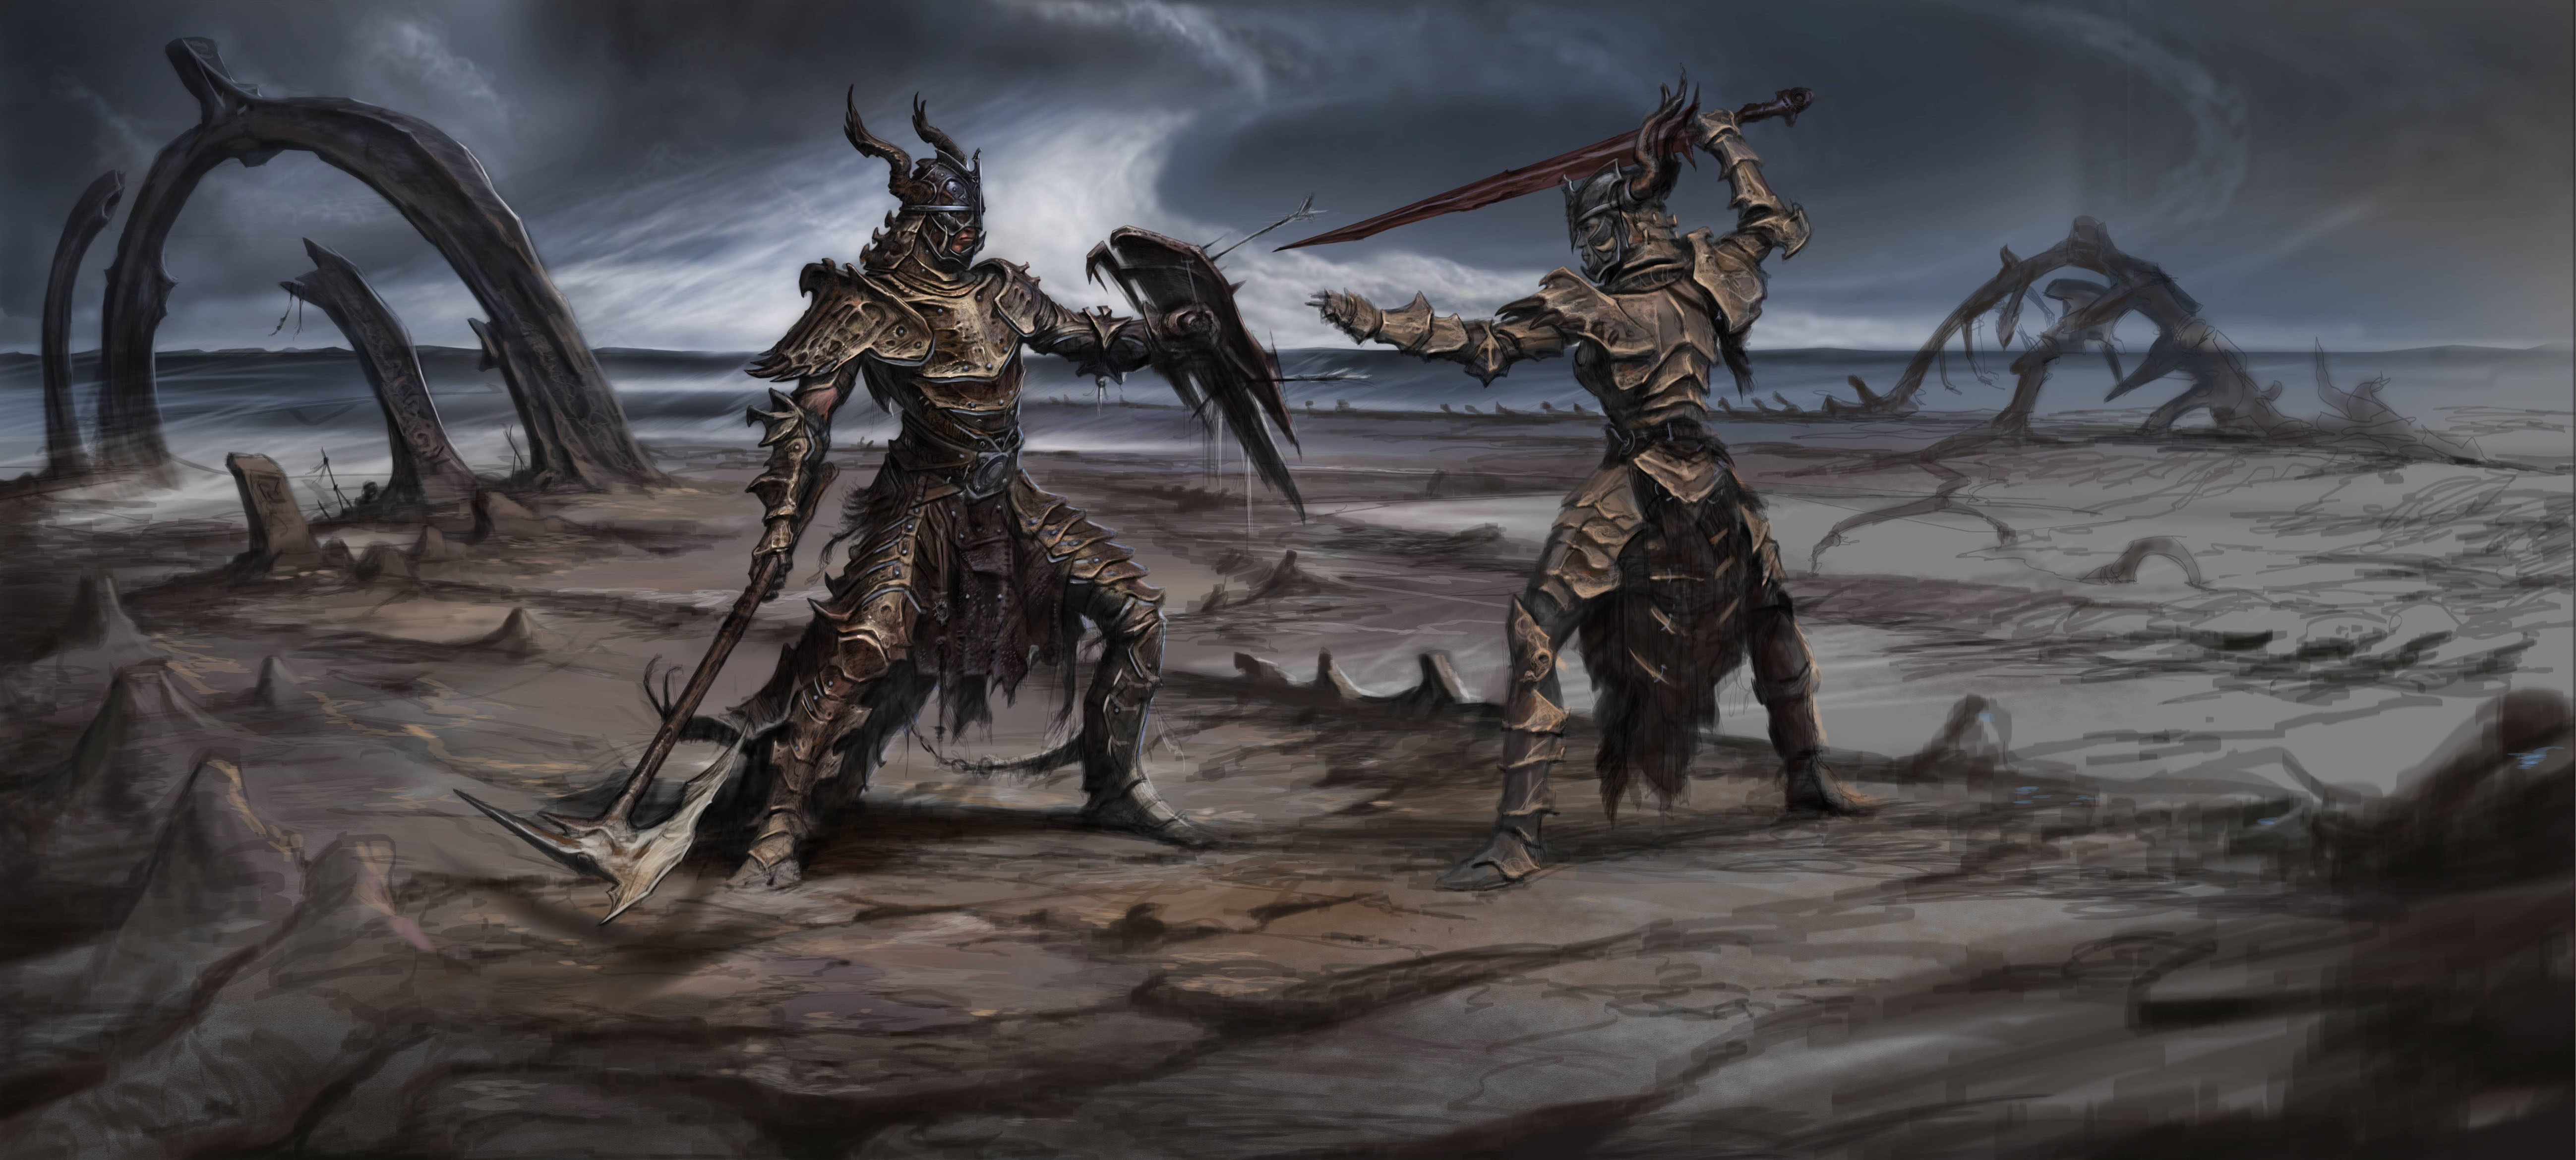 4k Wallpaper Games War Sword Weapons Fight Shield Skyrim The